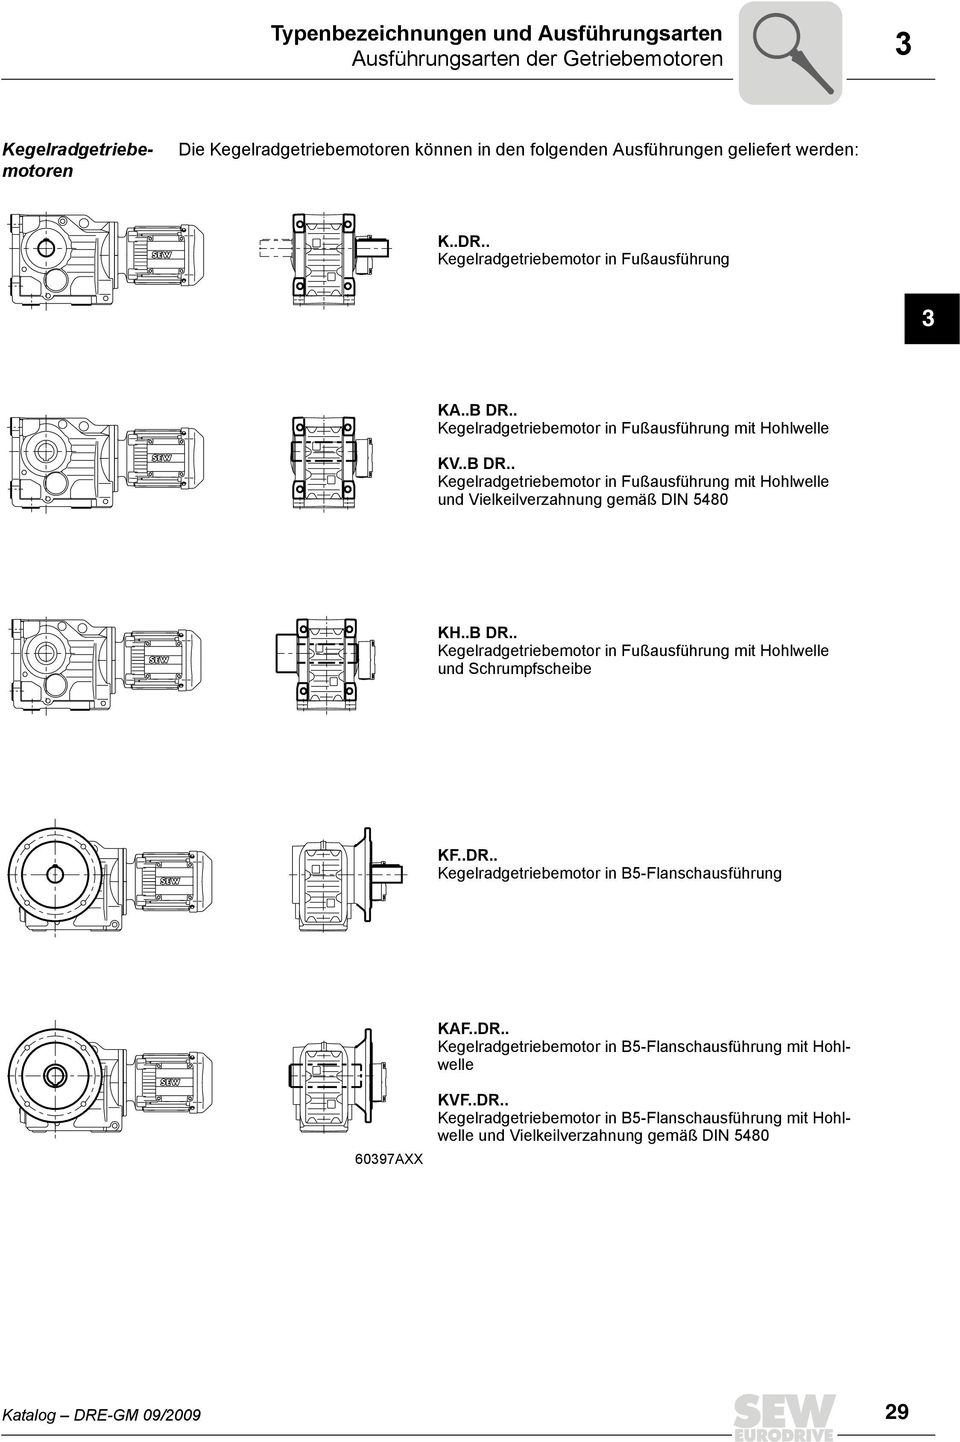 .DR.. Kegelradgetriebemotor in B5-Flanschausführung 4 5 6 7 8 9 10 11 12 1 14 15 16 17 18 6097AXX KAF..DR.. Kegelradgetriebemotor in B5-Flanschausführung mit KVF..DR.. Kegelradgetriebemotor in B5-Flanschausführung mit und Vielkeilverzahnung gemäß DIN 5480 19 20 21 22 Katalog DRE-GM 09/2009 29